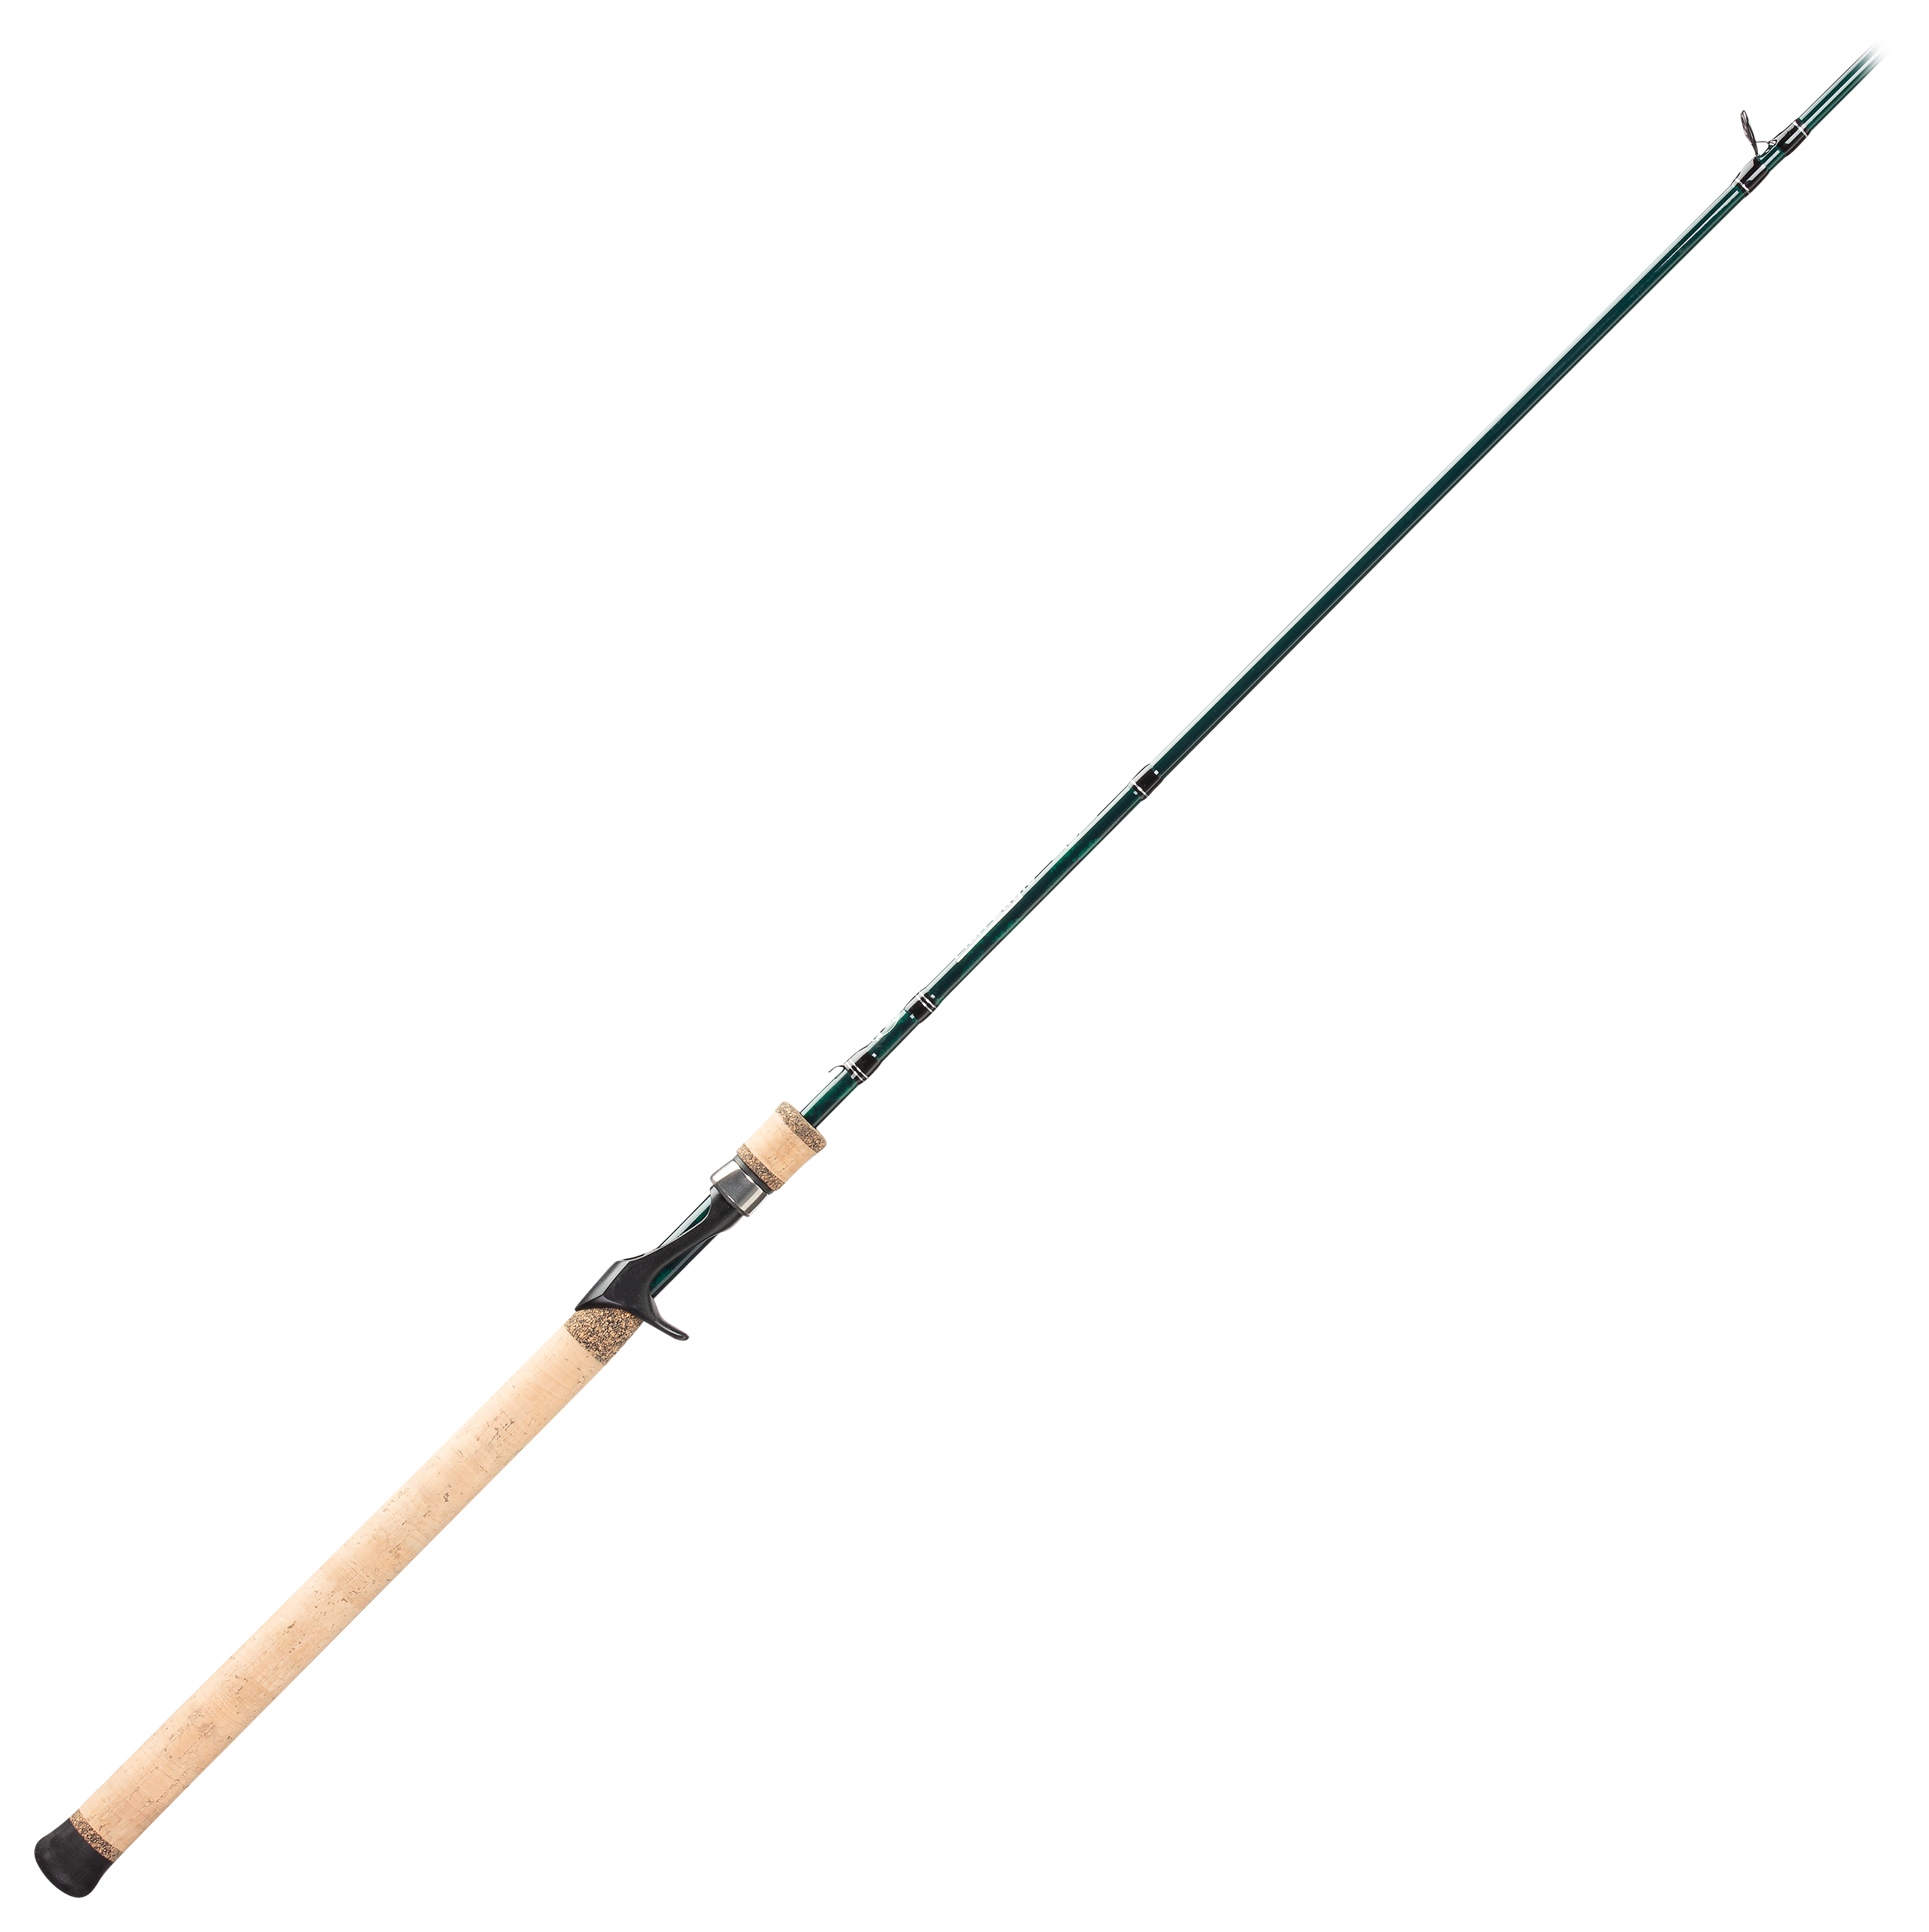 Bass Pro Shops Fish Eagle Salmon/Steelhead Casting Rod - 8'6 - Medium